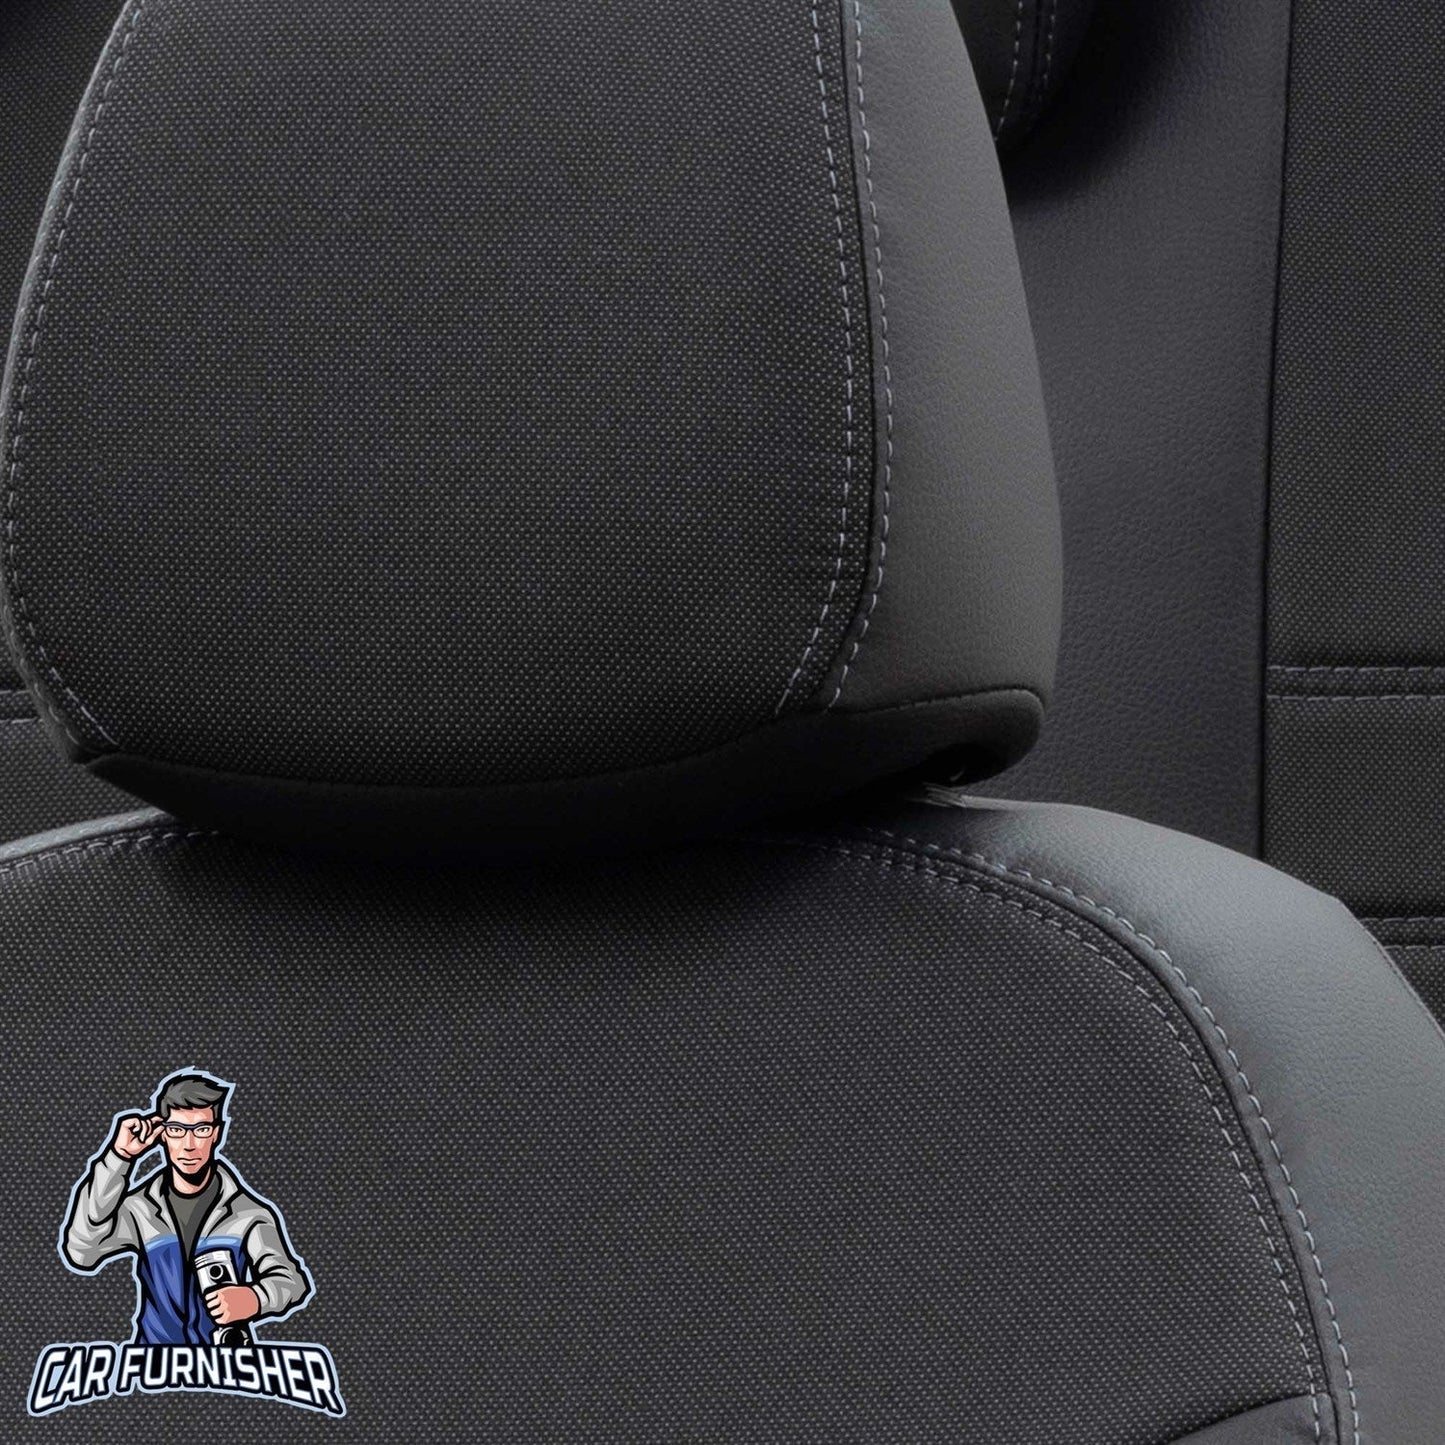 Nissan NV400 Seat Cover Original Jacquard Design Black Leather & Jacquard Fabric